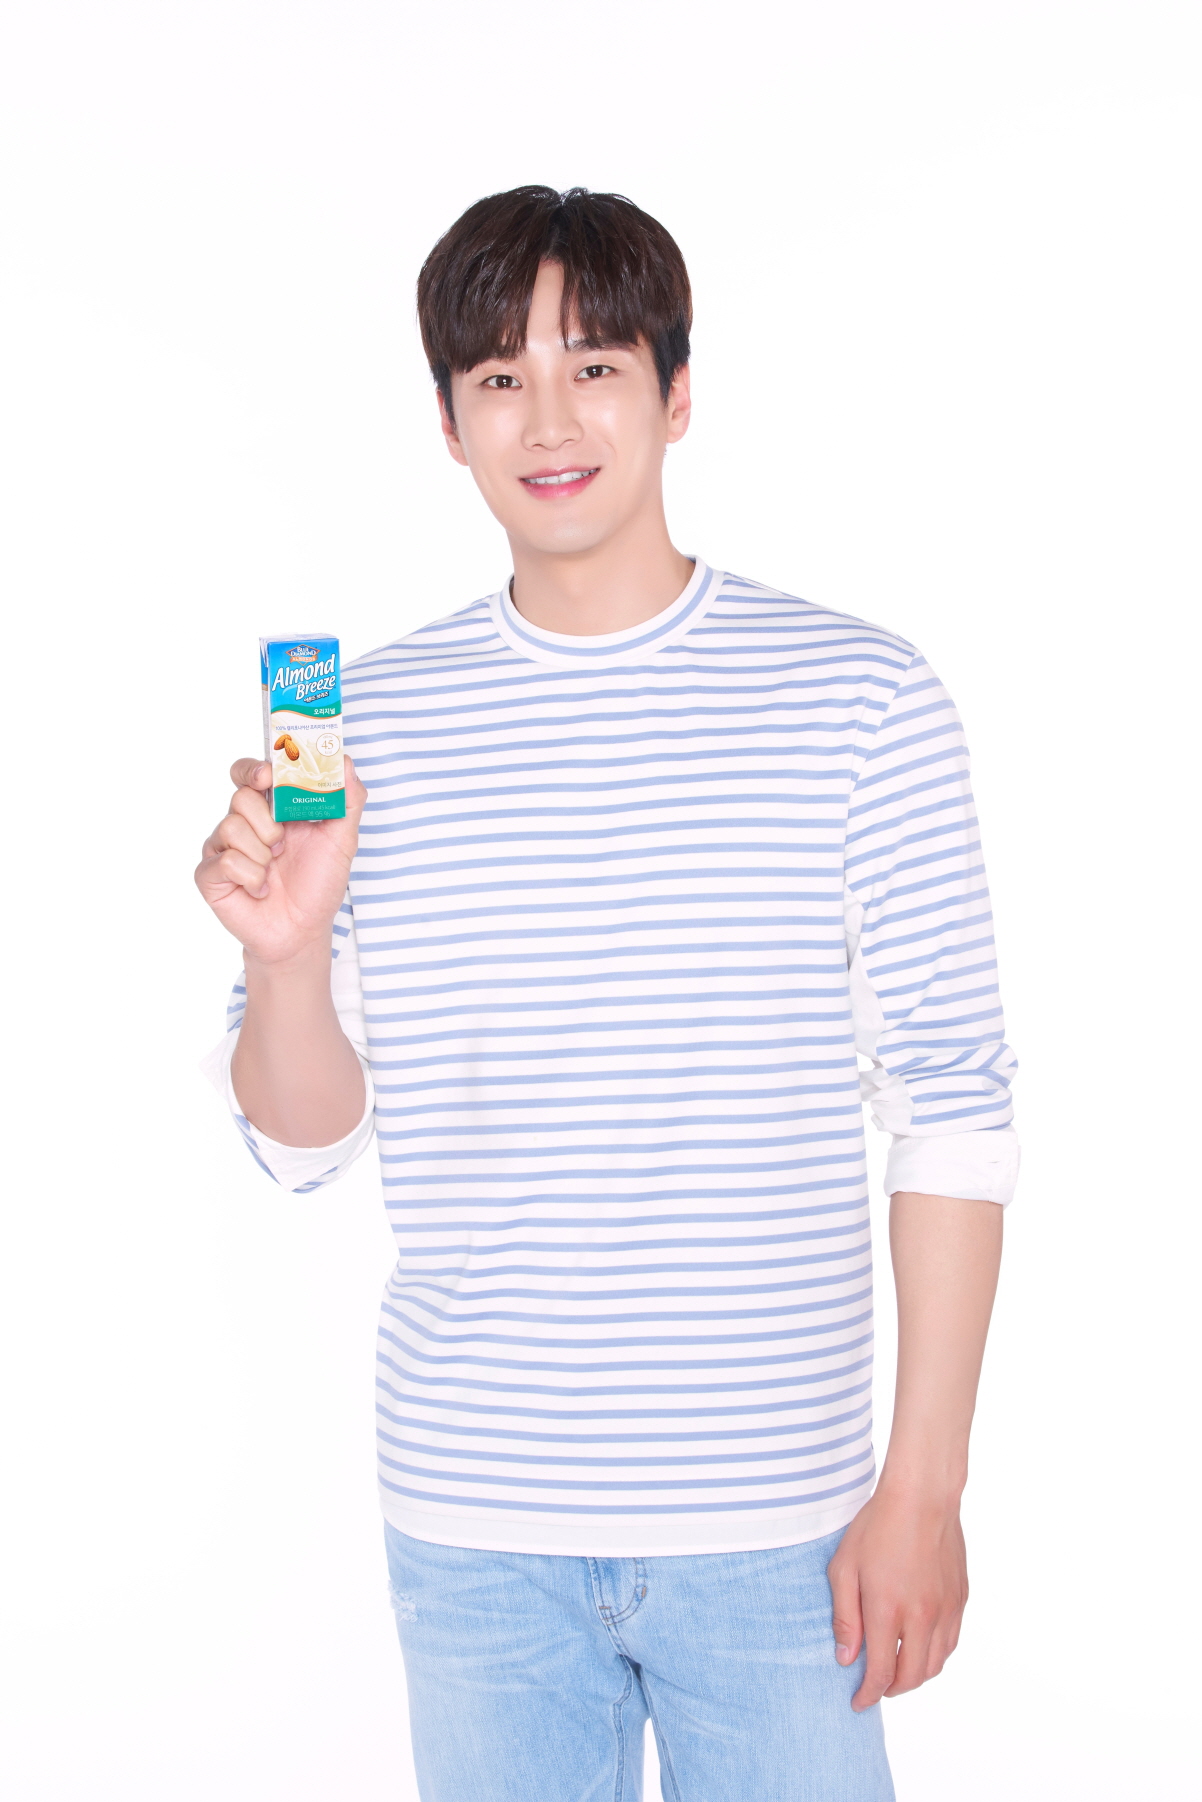 ahn-bo-hyun-selected-as-new-model-for-milk-brand-almond-breeze-3